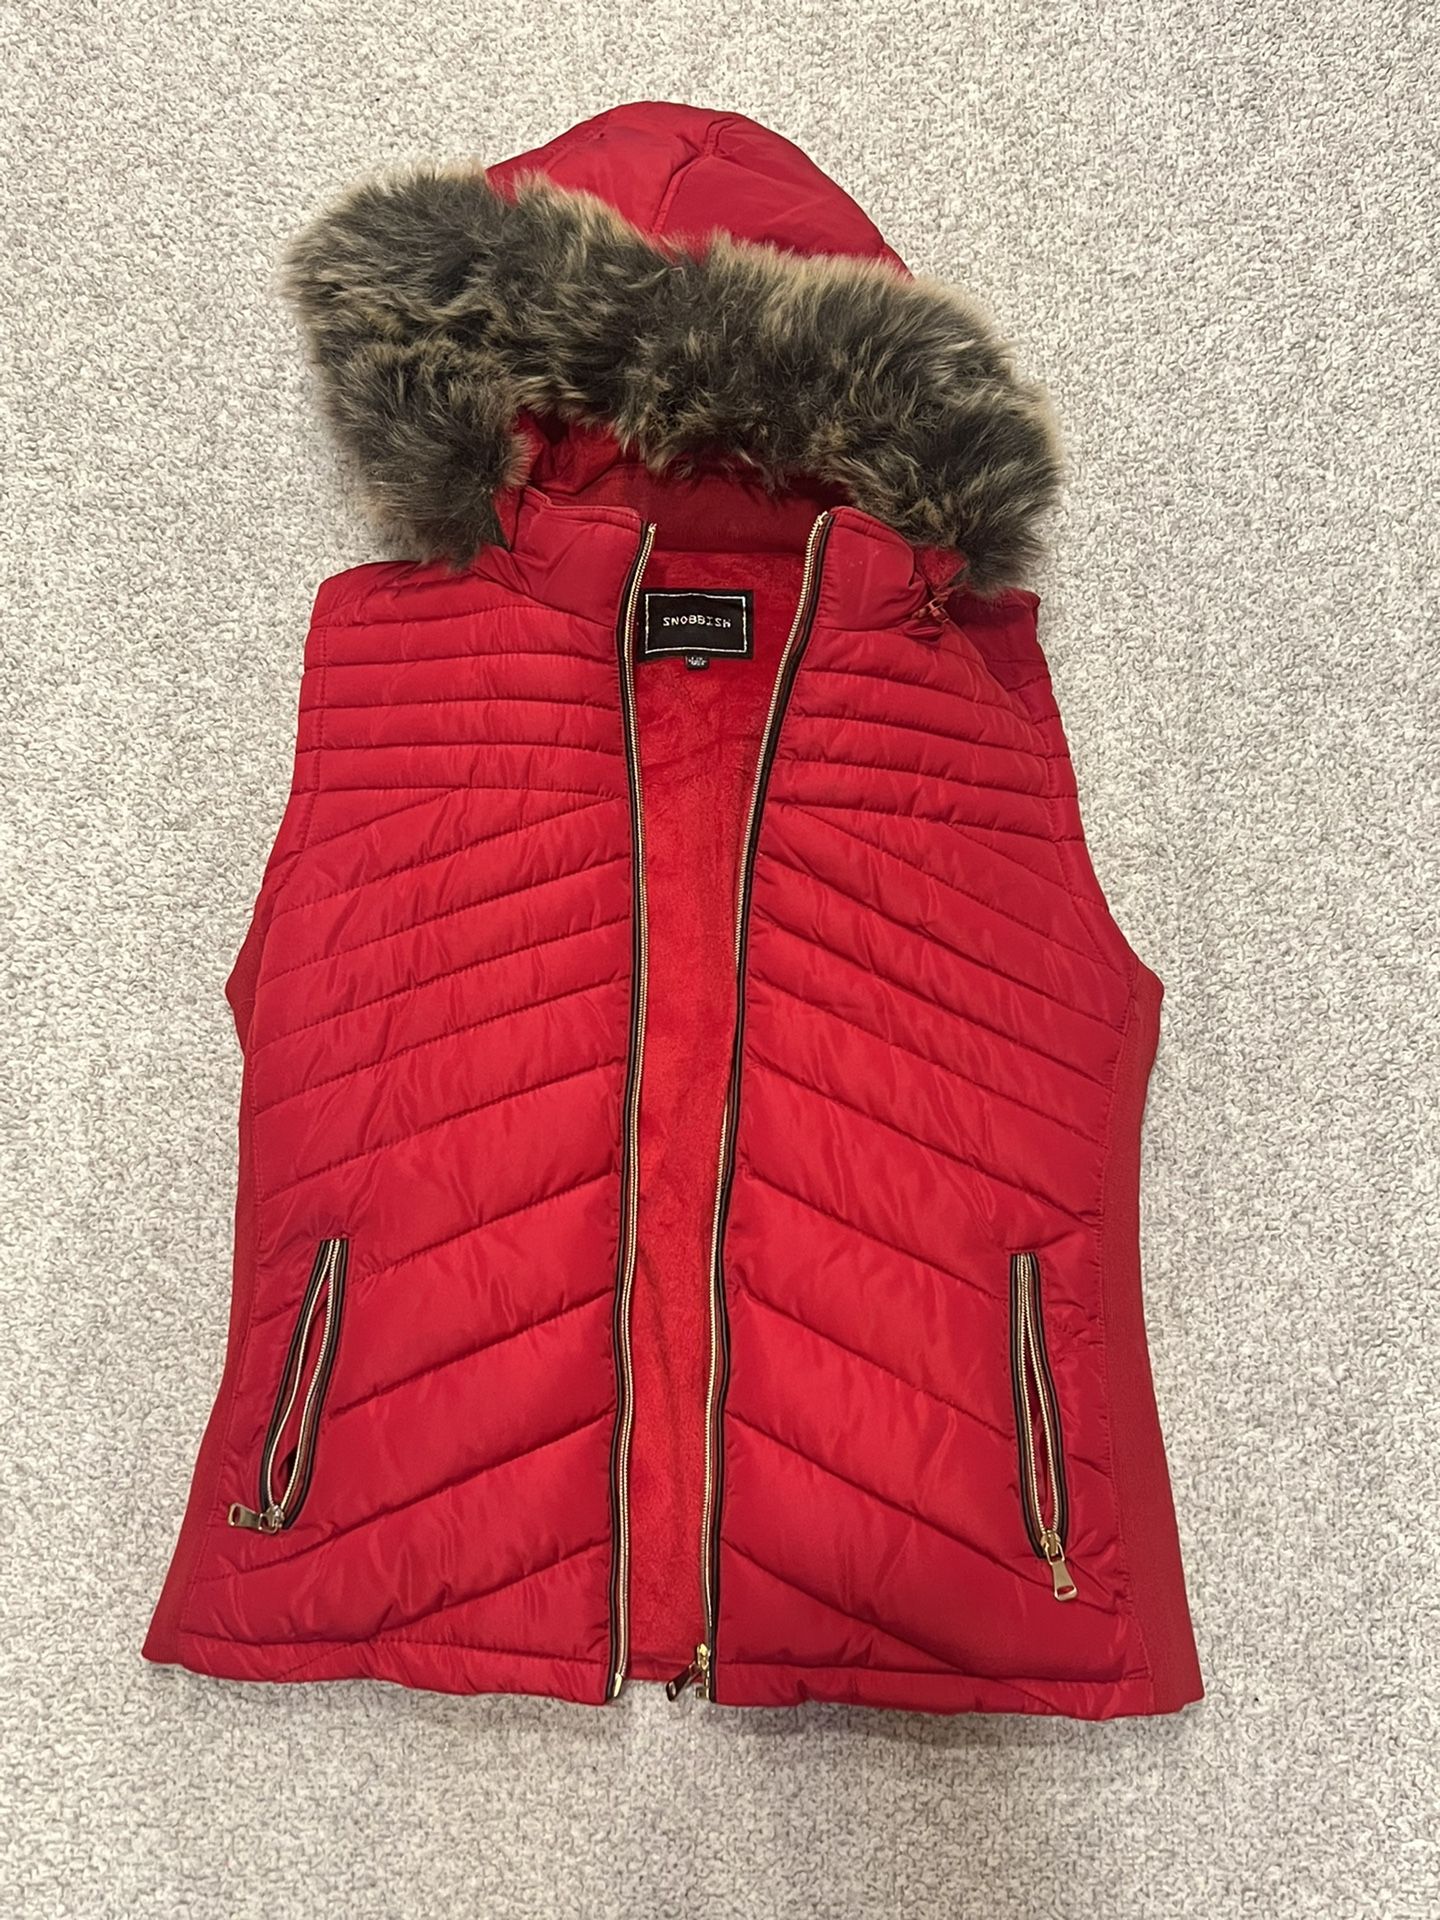 Snobbish - Red Puffer Vest